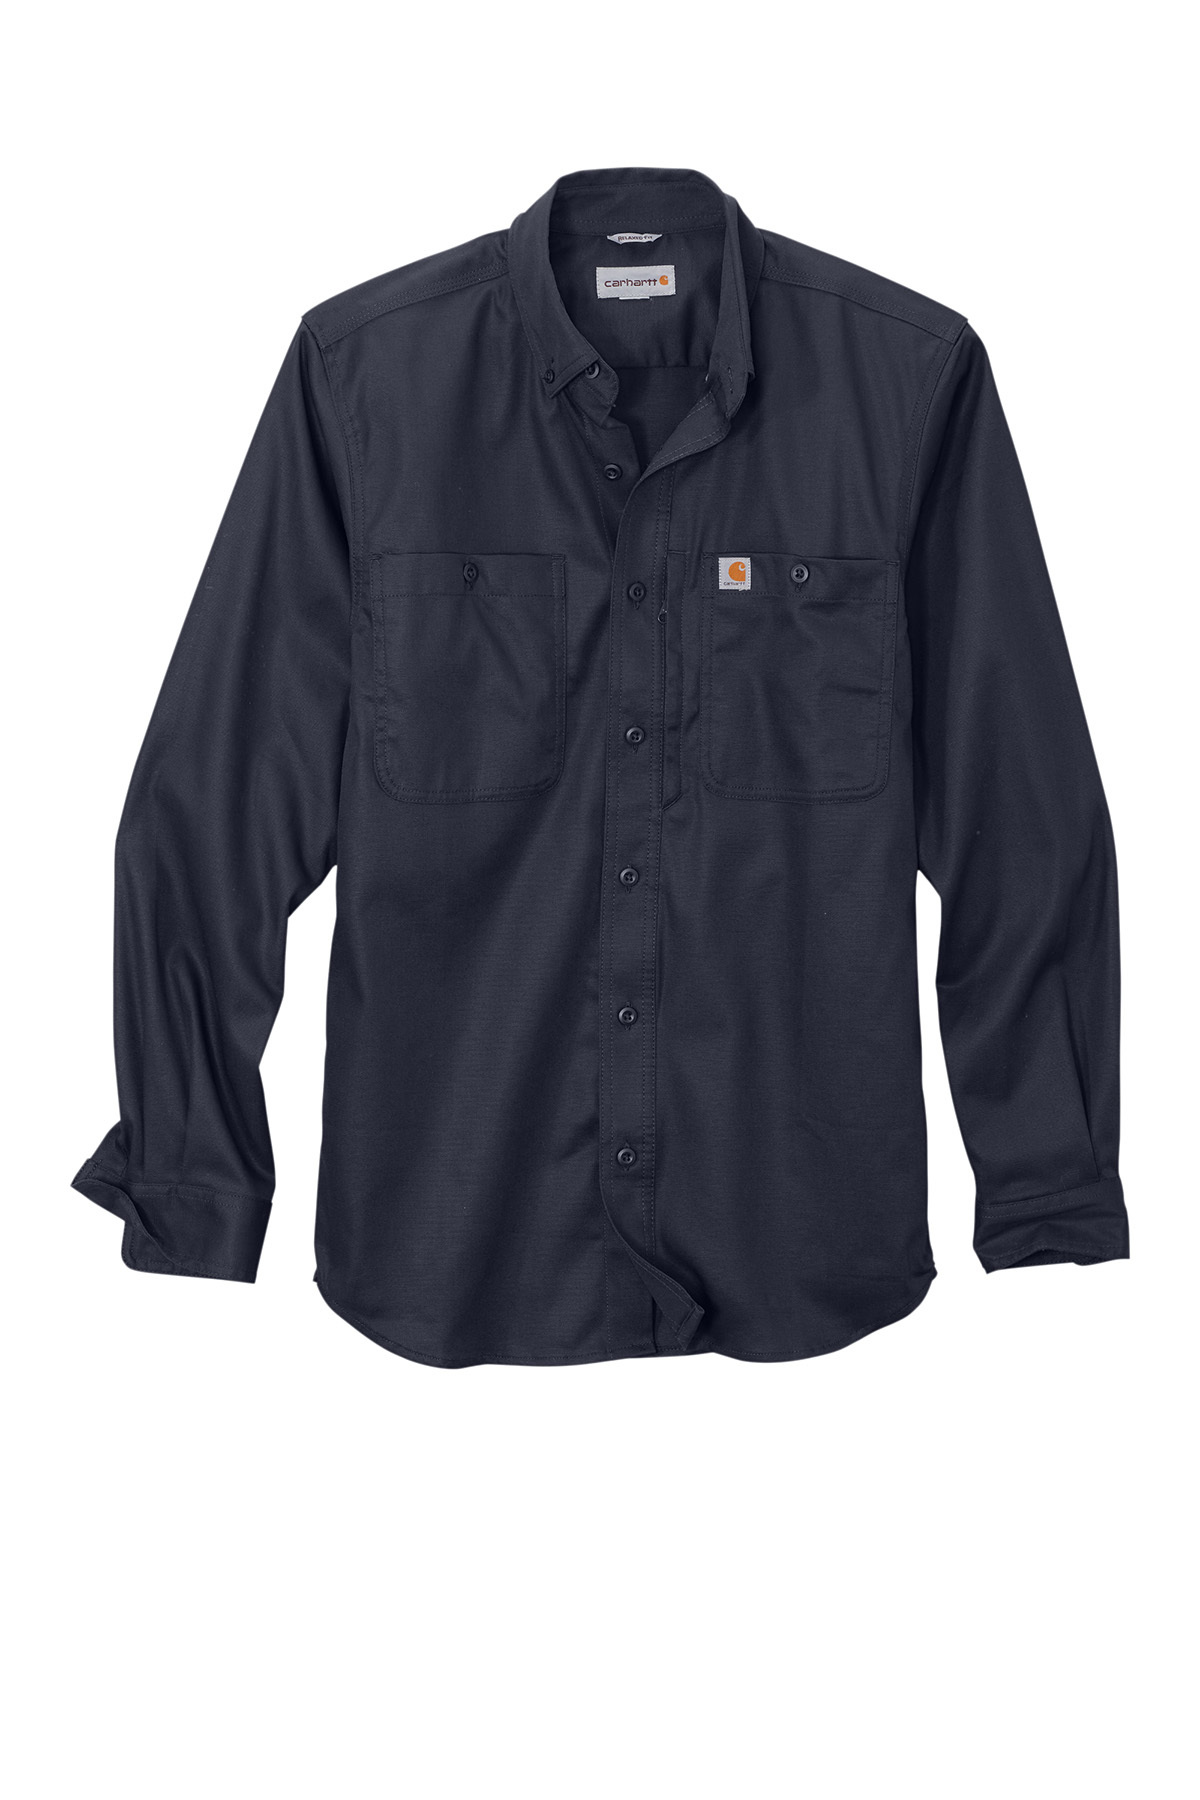 SanMar | Sleeve Series Rugged Carhartt Product | Professional Long Shirt